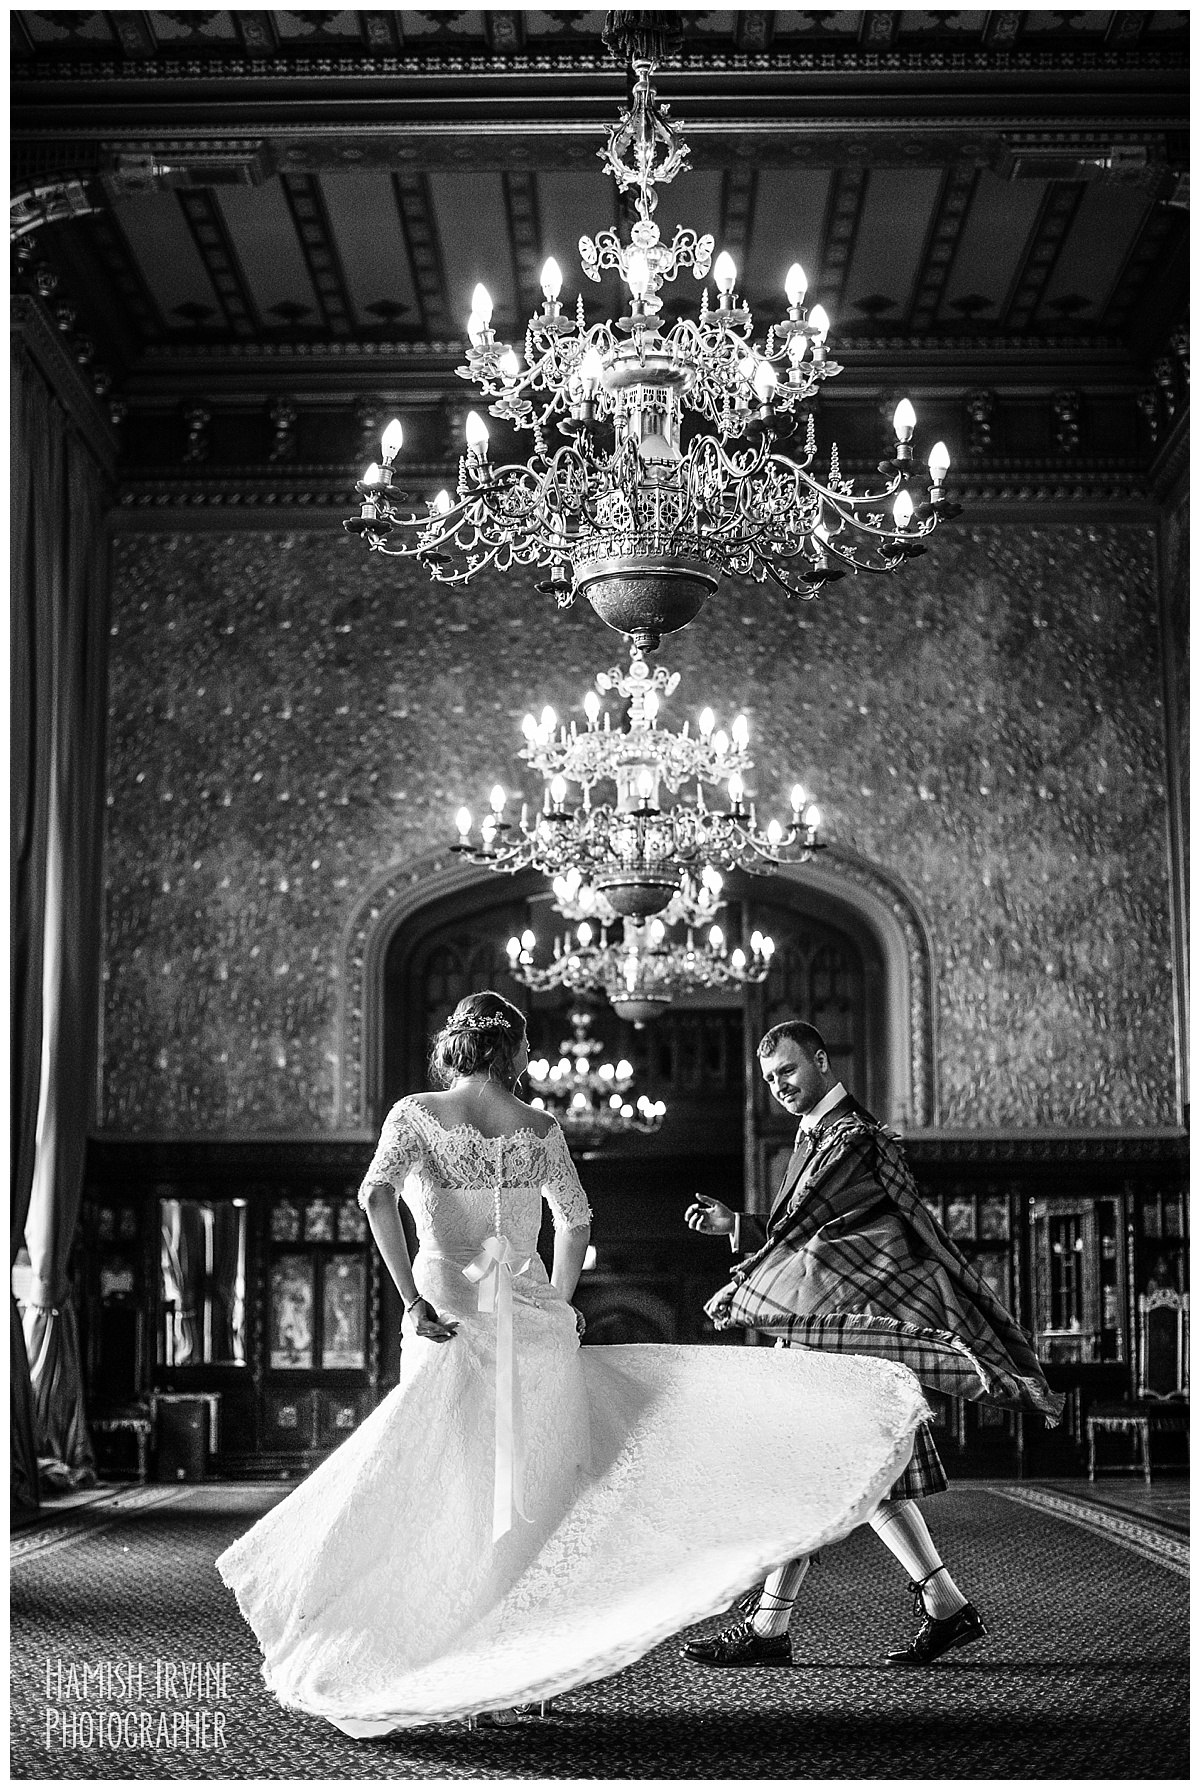 Carlton Towers Wedding photography, Hamish Irvine photography photographer, leeds, yorkshire